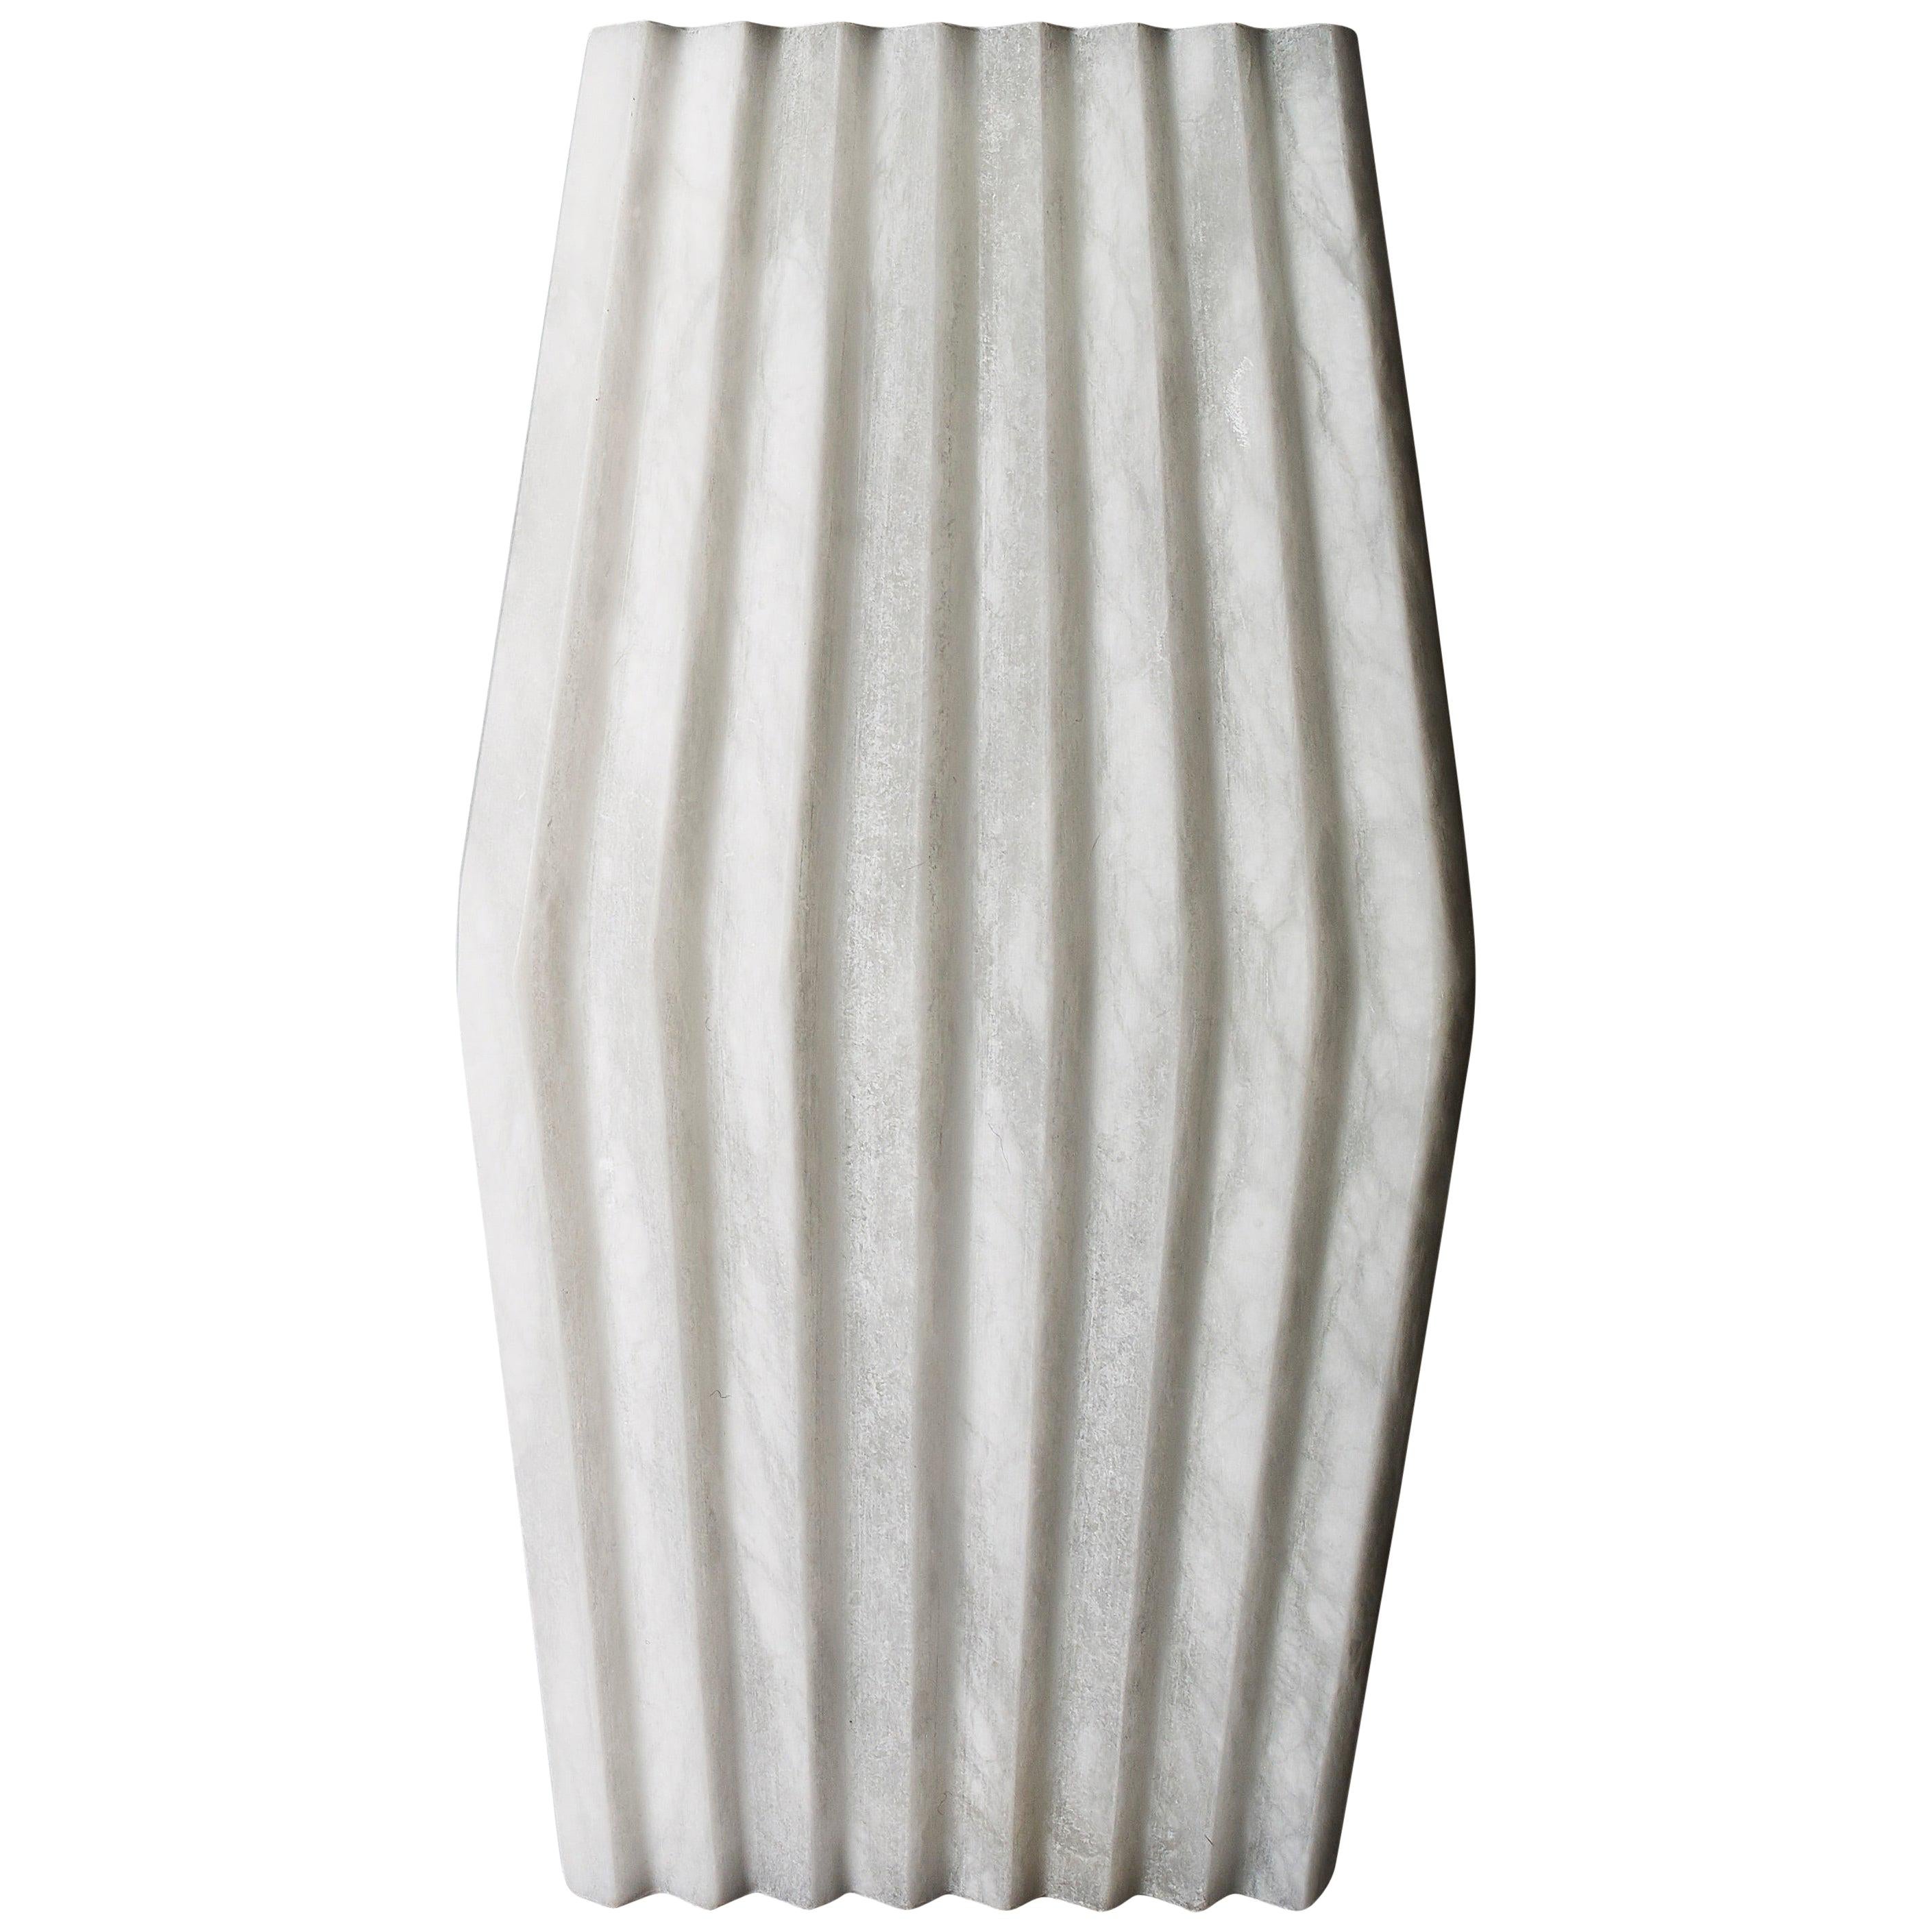 Bespoke Minimalist Italian Neoclassical White Alabaster Geometric Modern Sconce